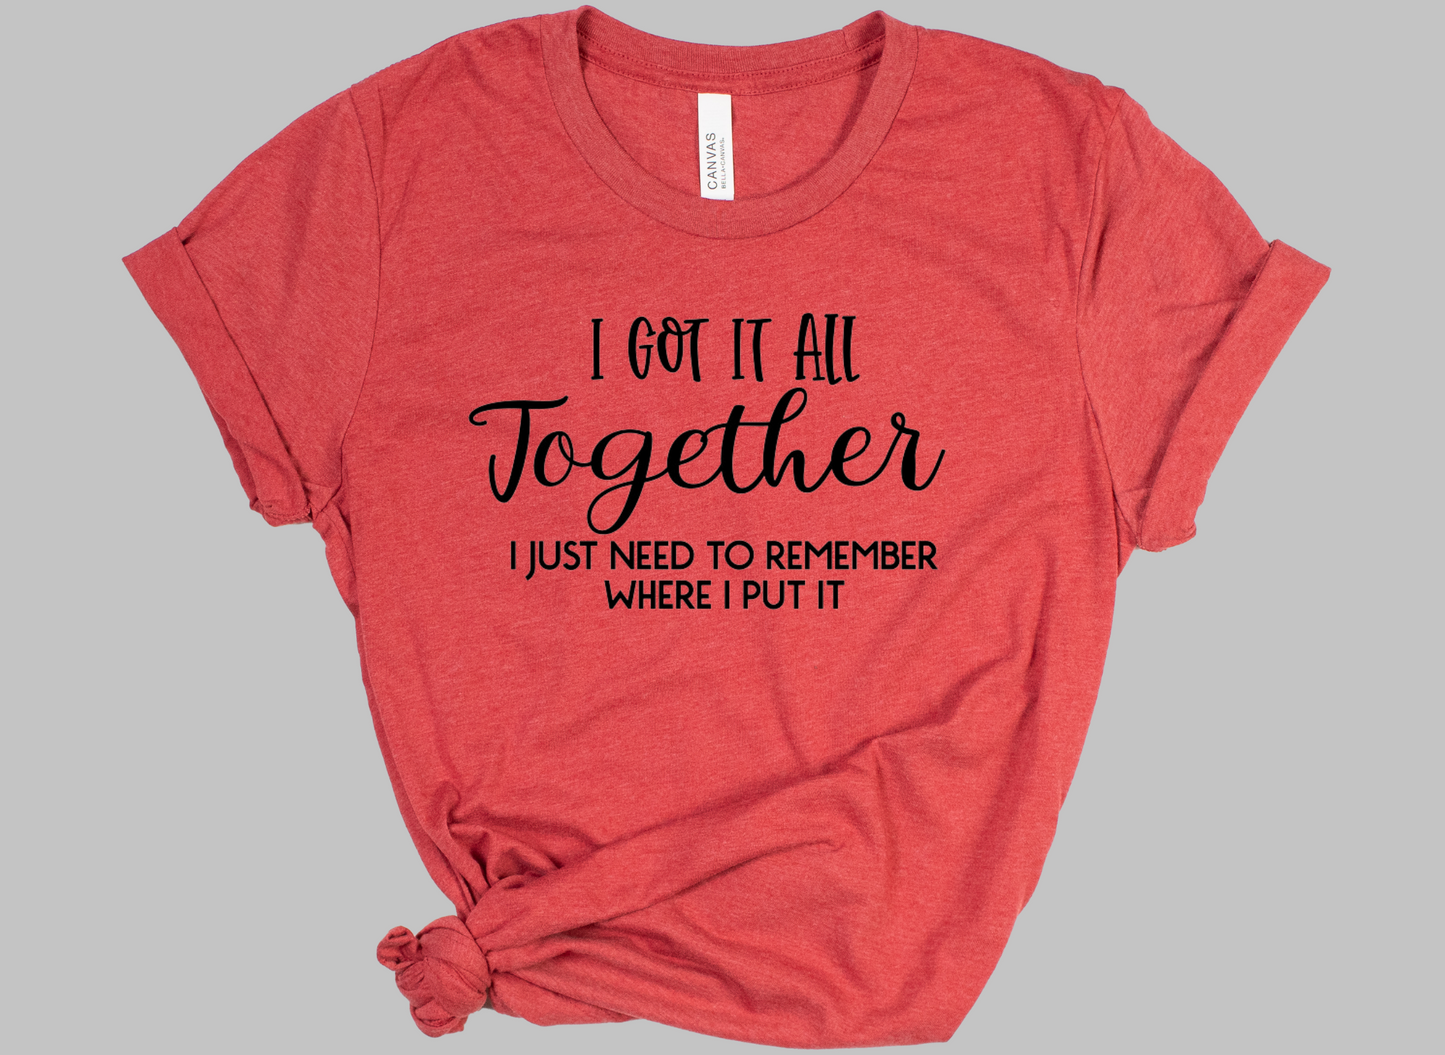 I Got It All Together - Adult T-Shirt